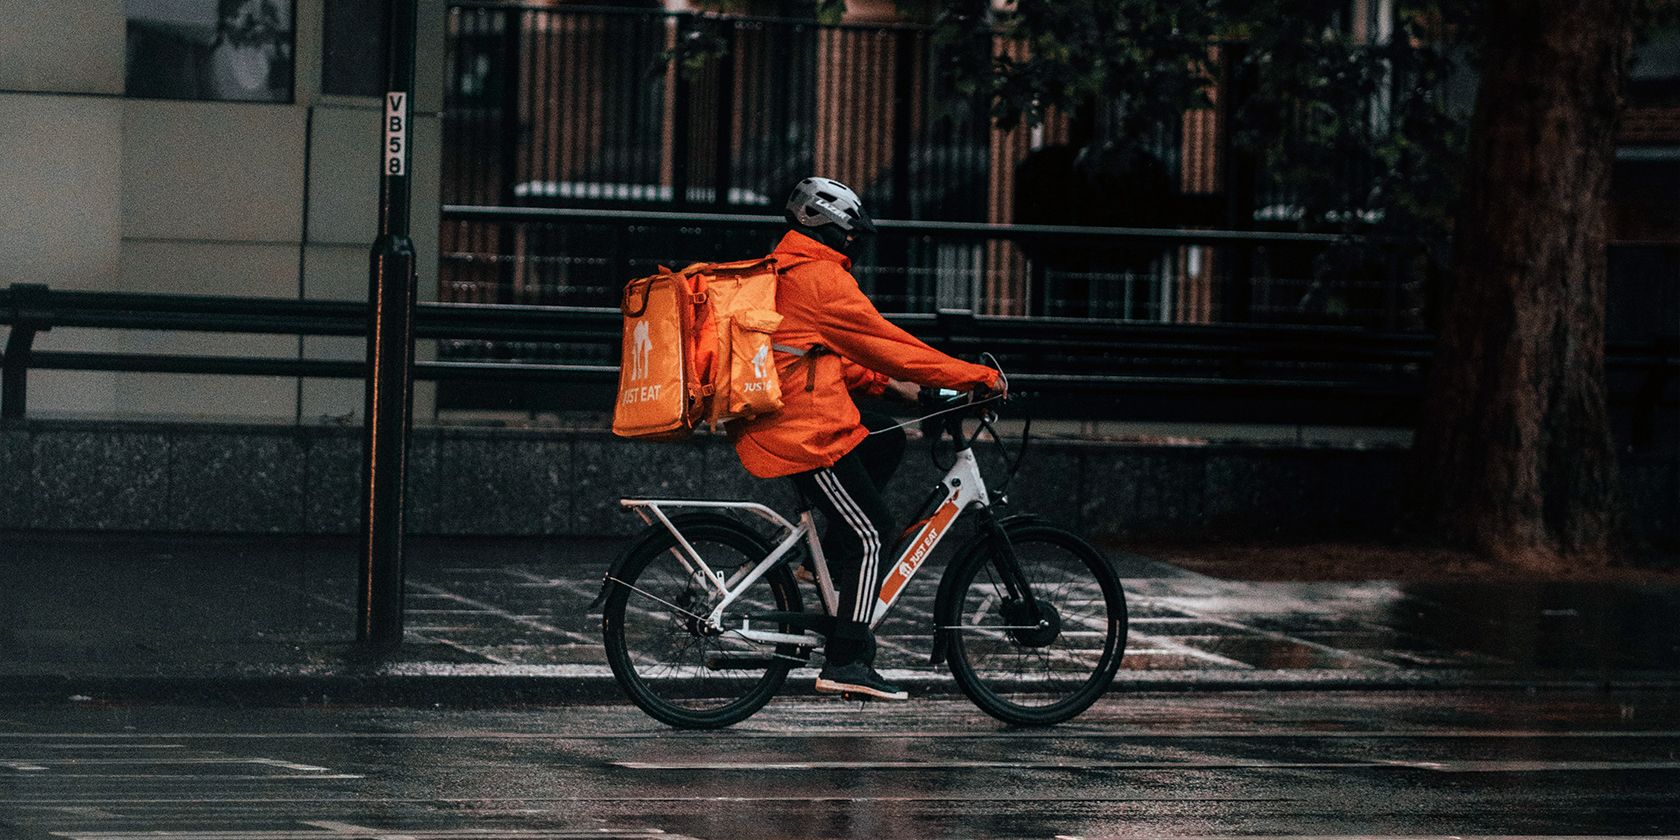 Food Delivery Biker Delivering Food in the Rain